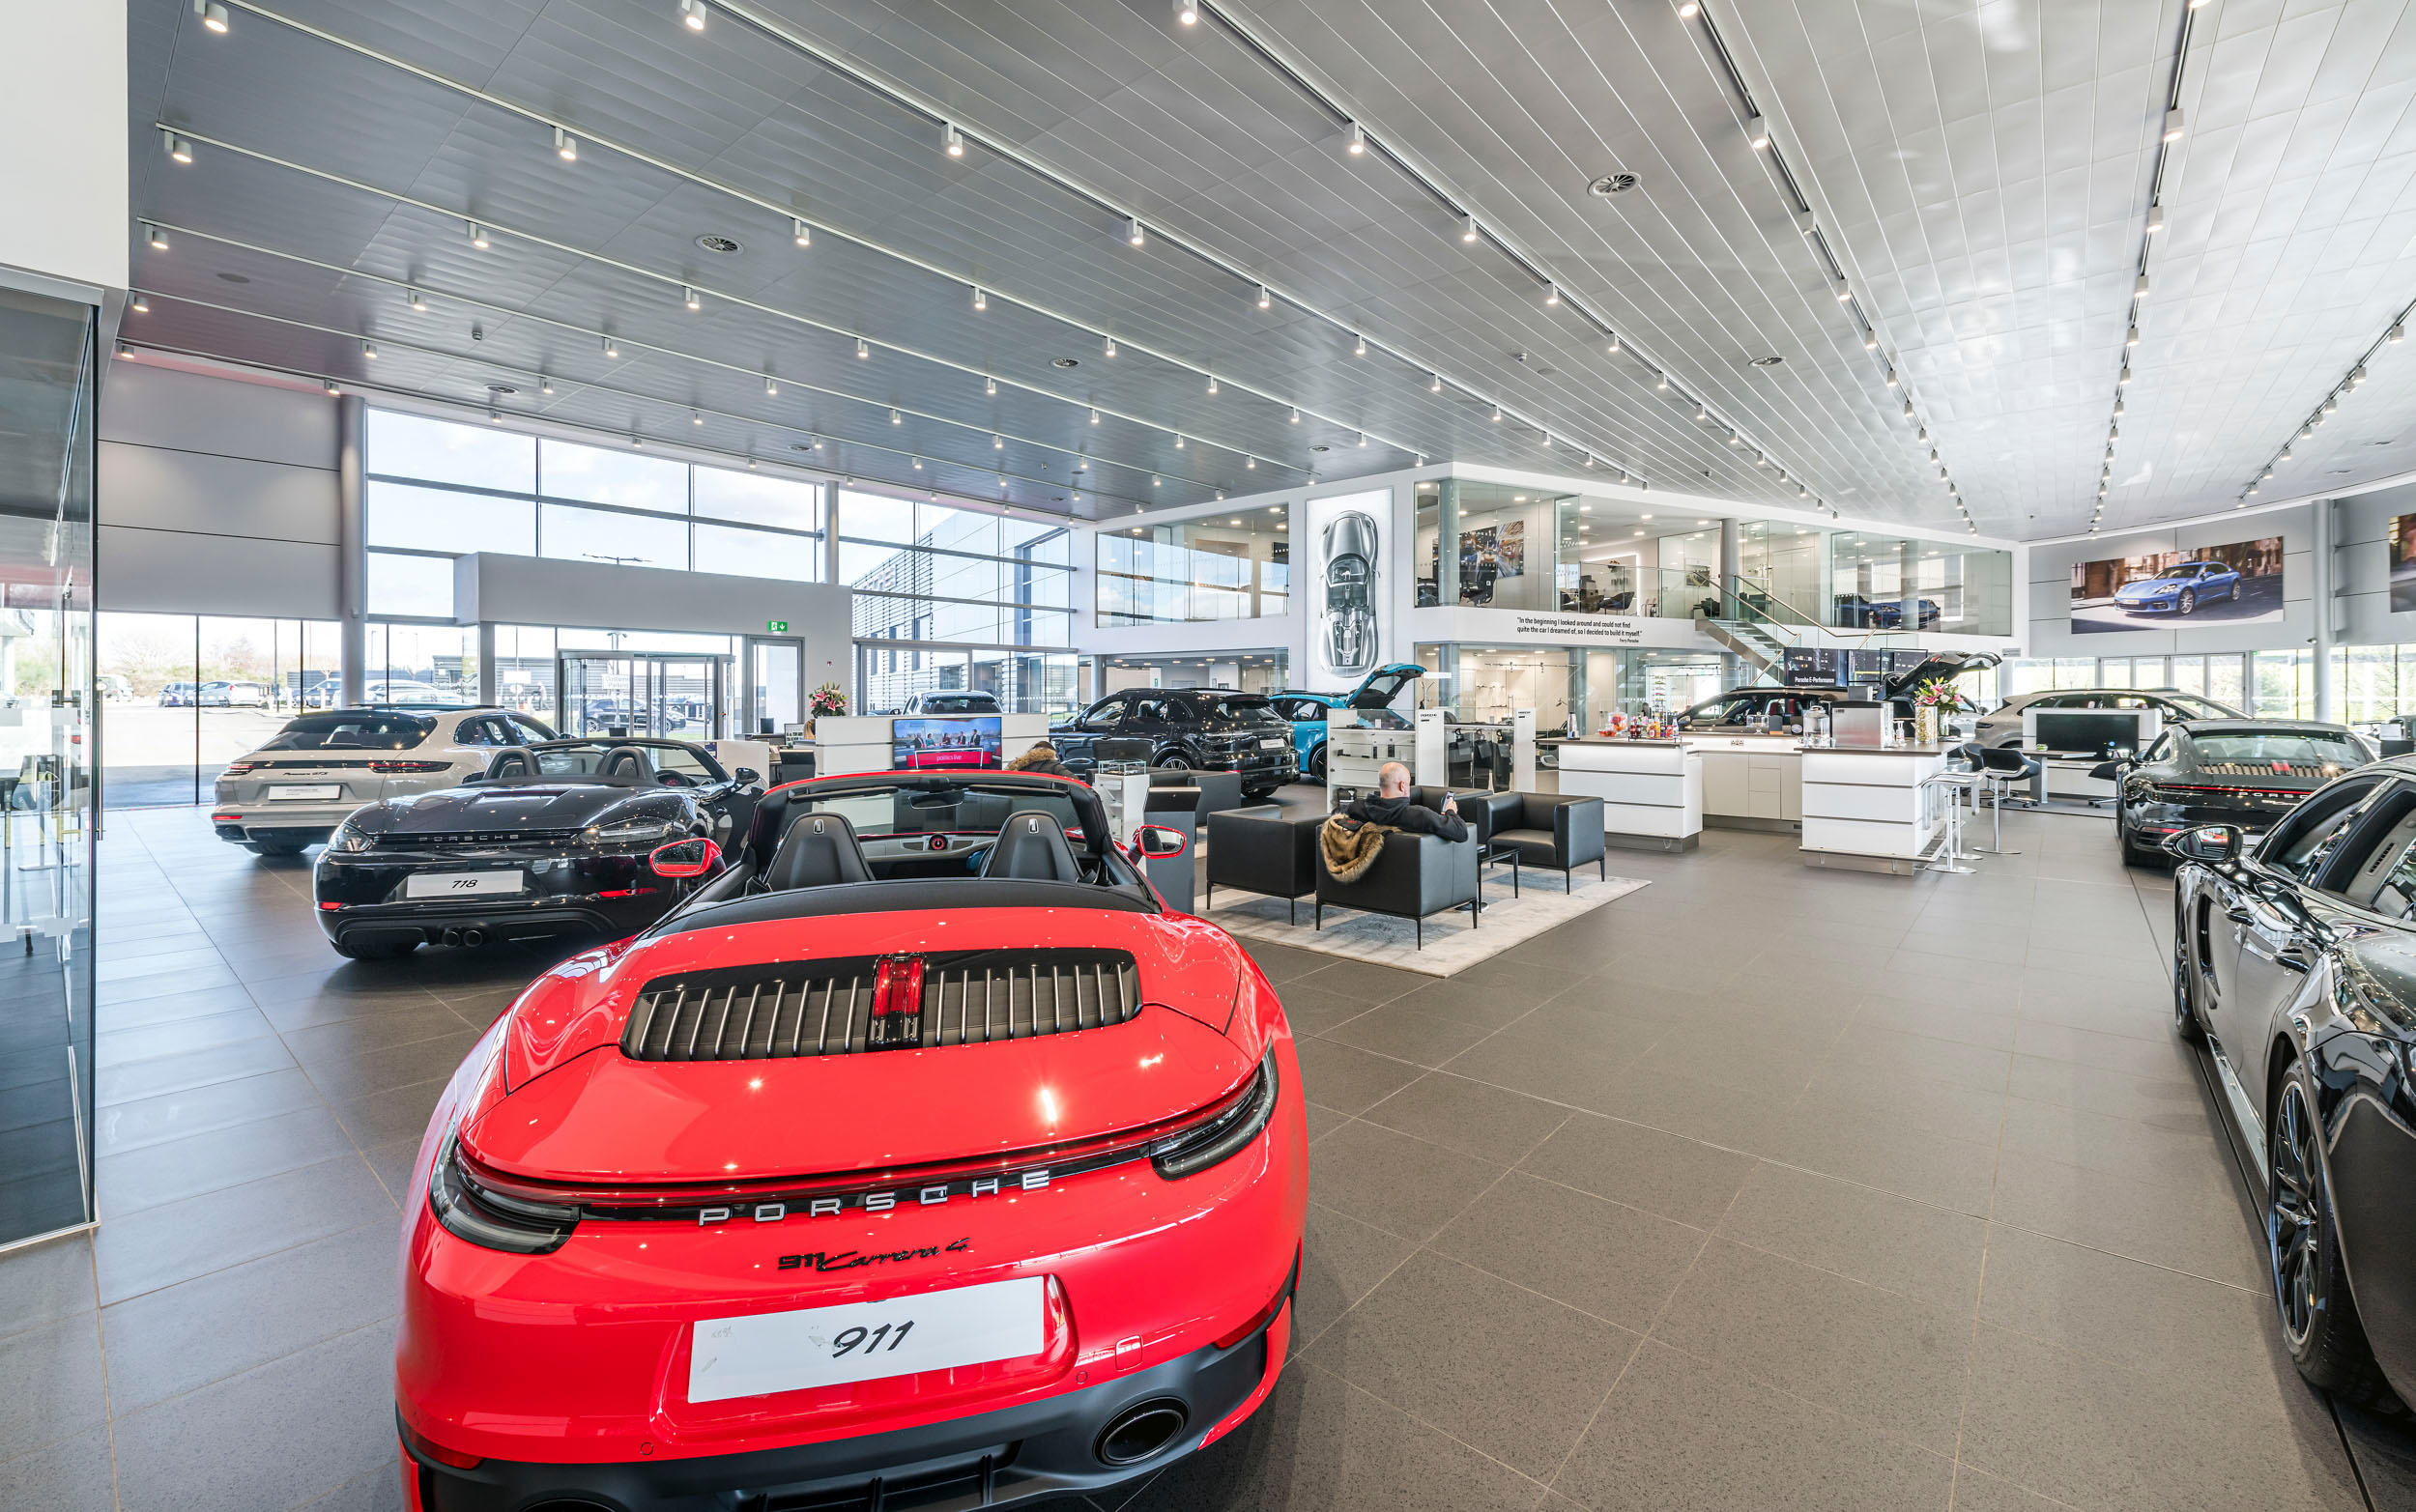 Porsche Centre Edinburgh Edinburgh 01314 755000